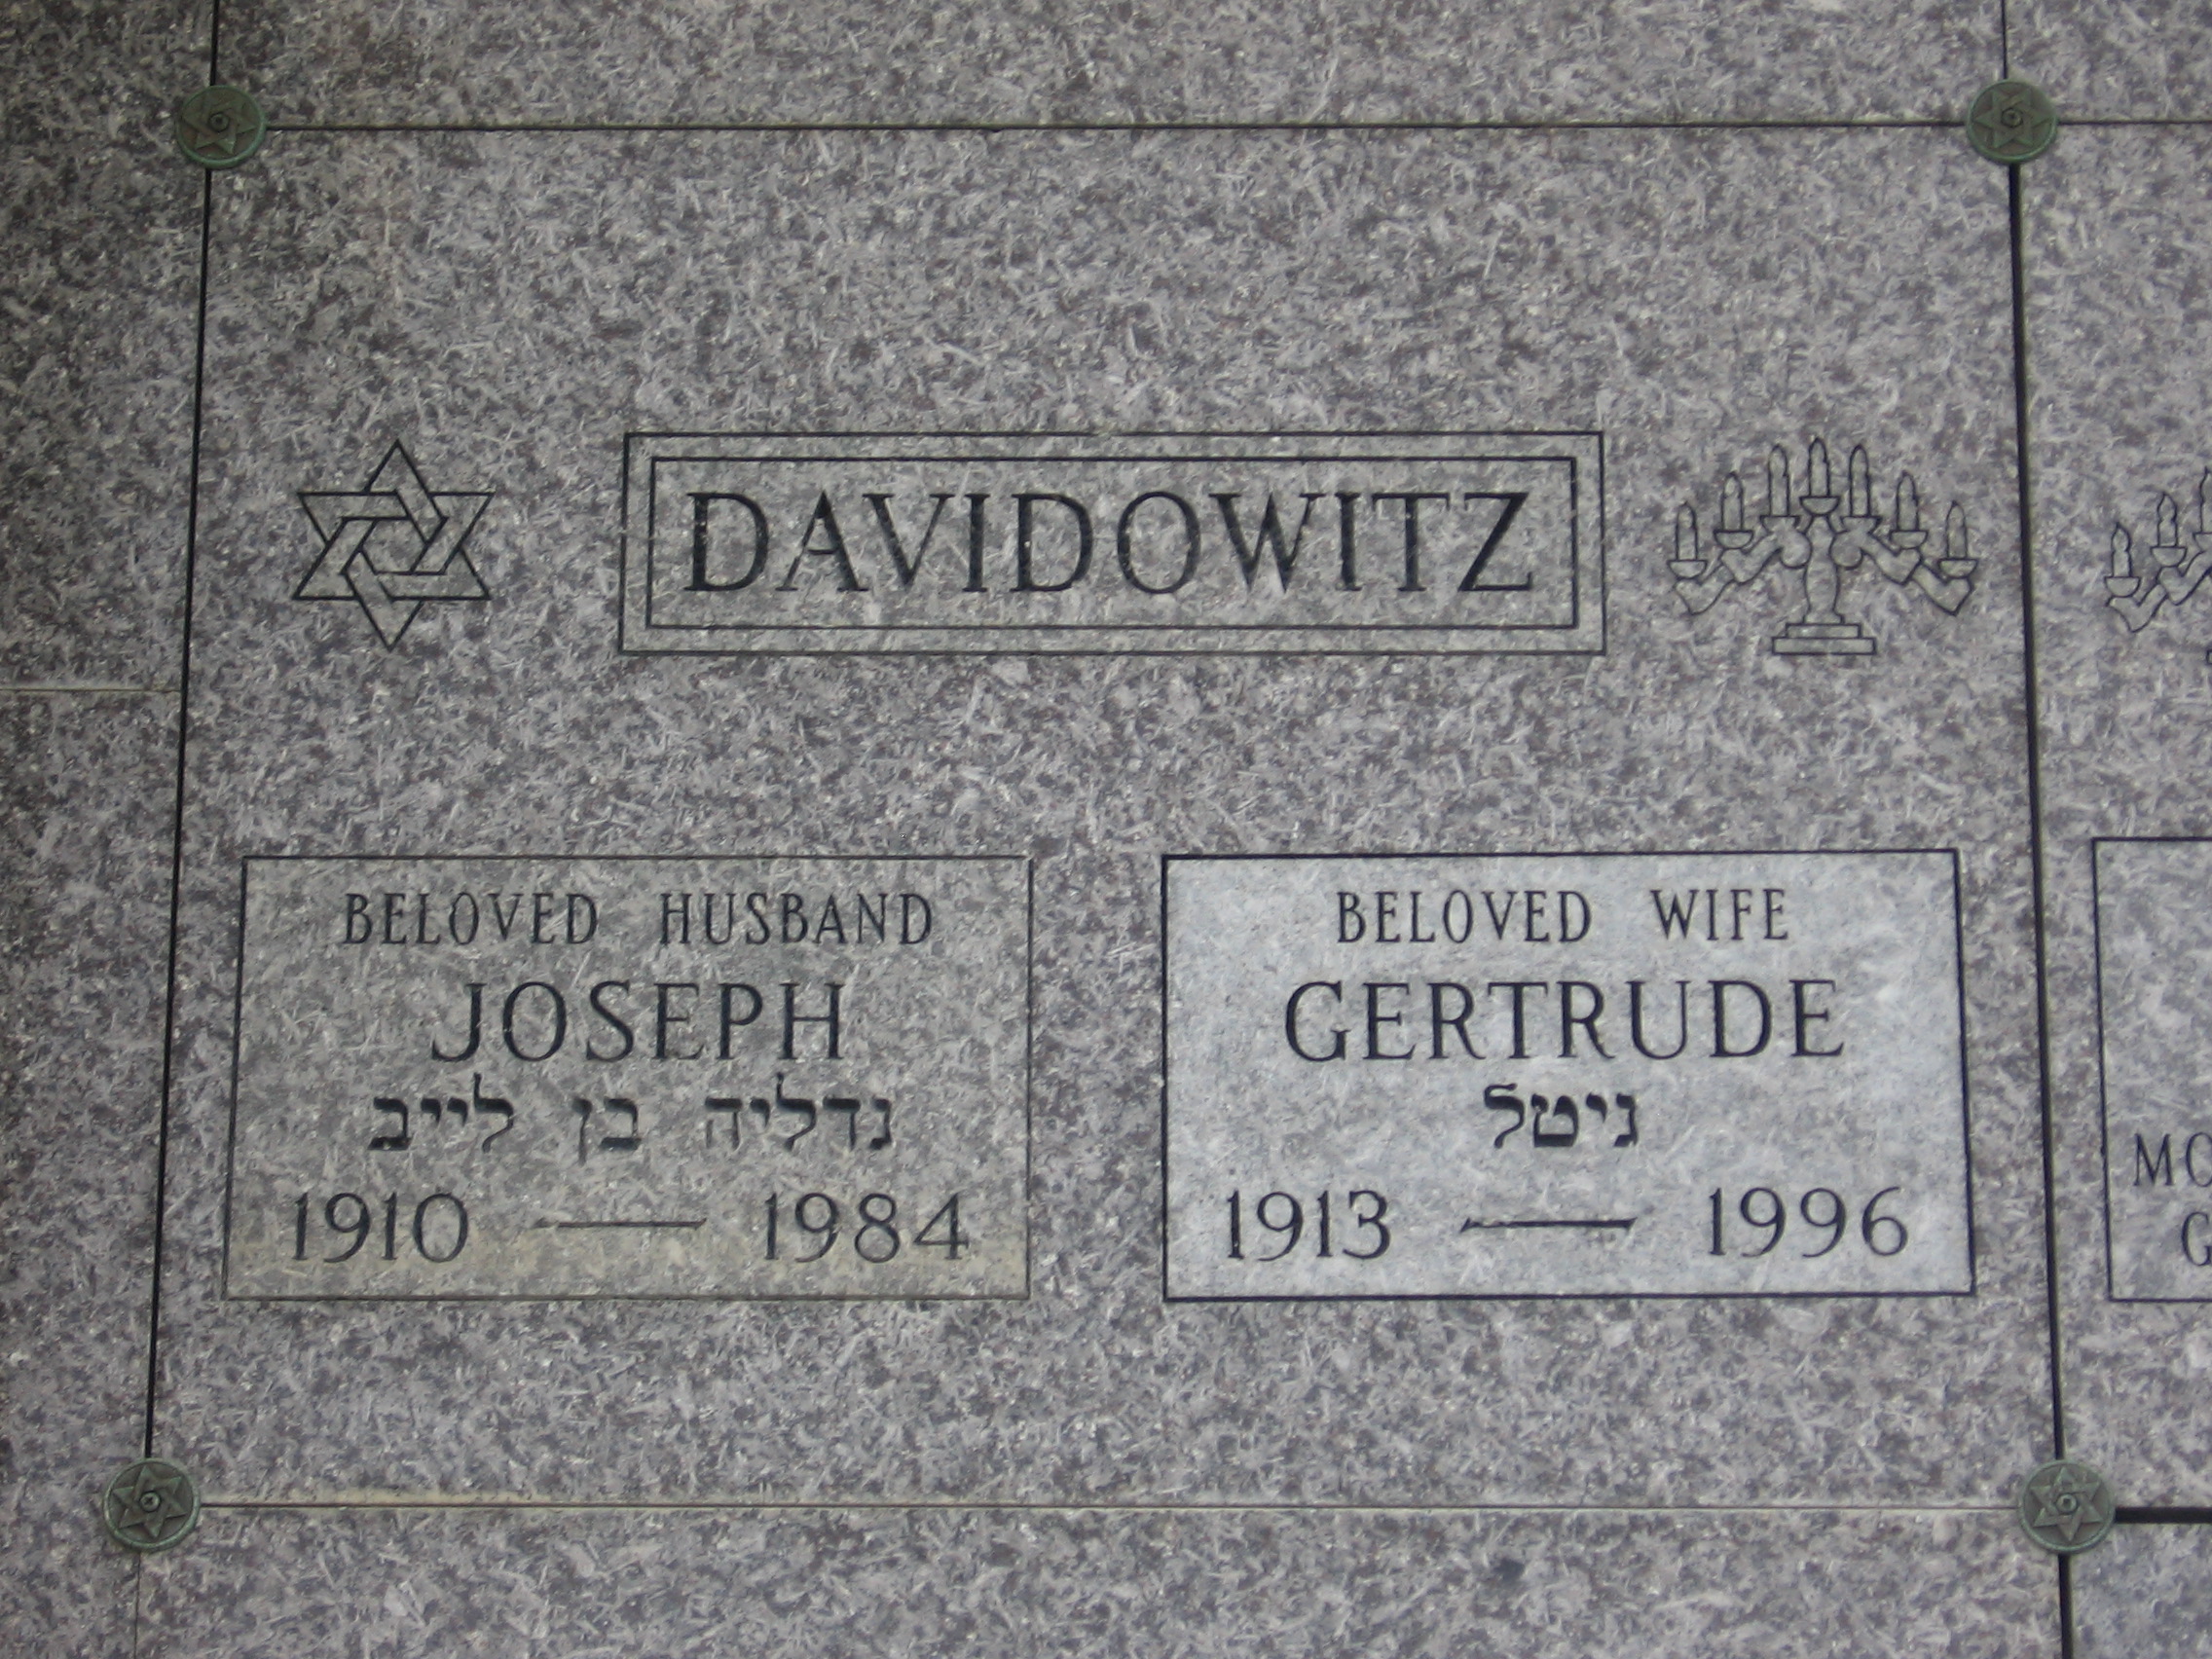 Gertrude Davidowitz